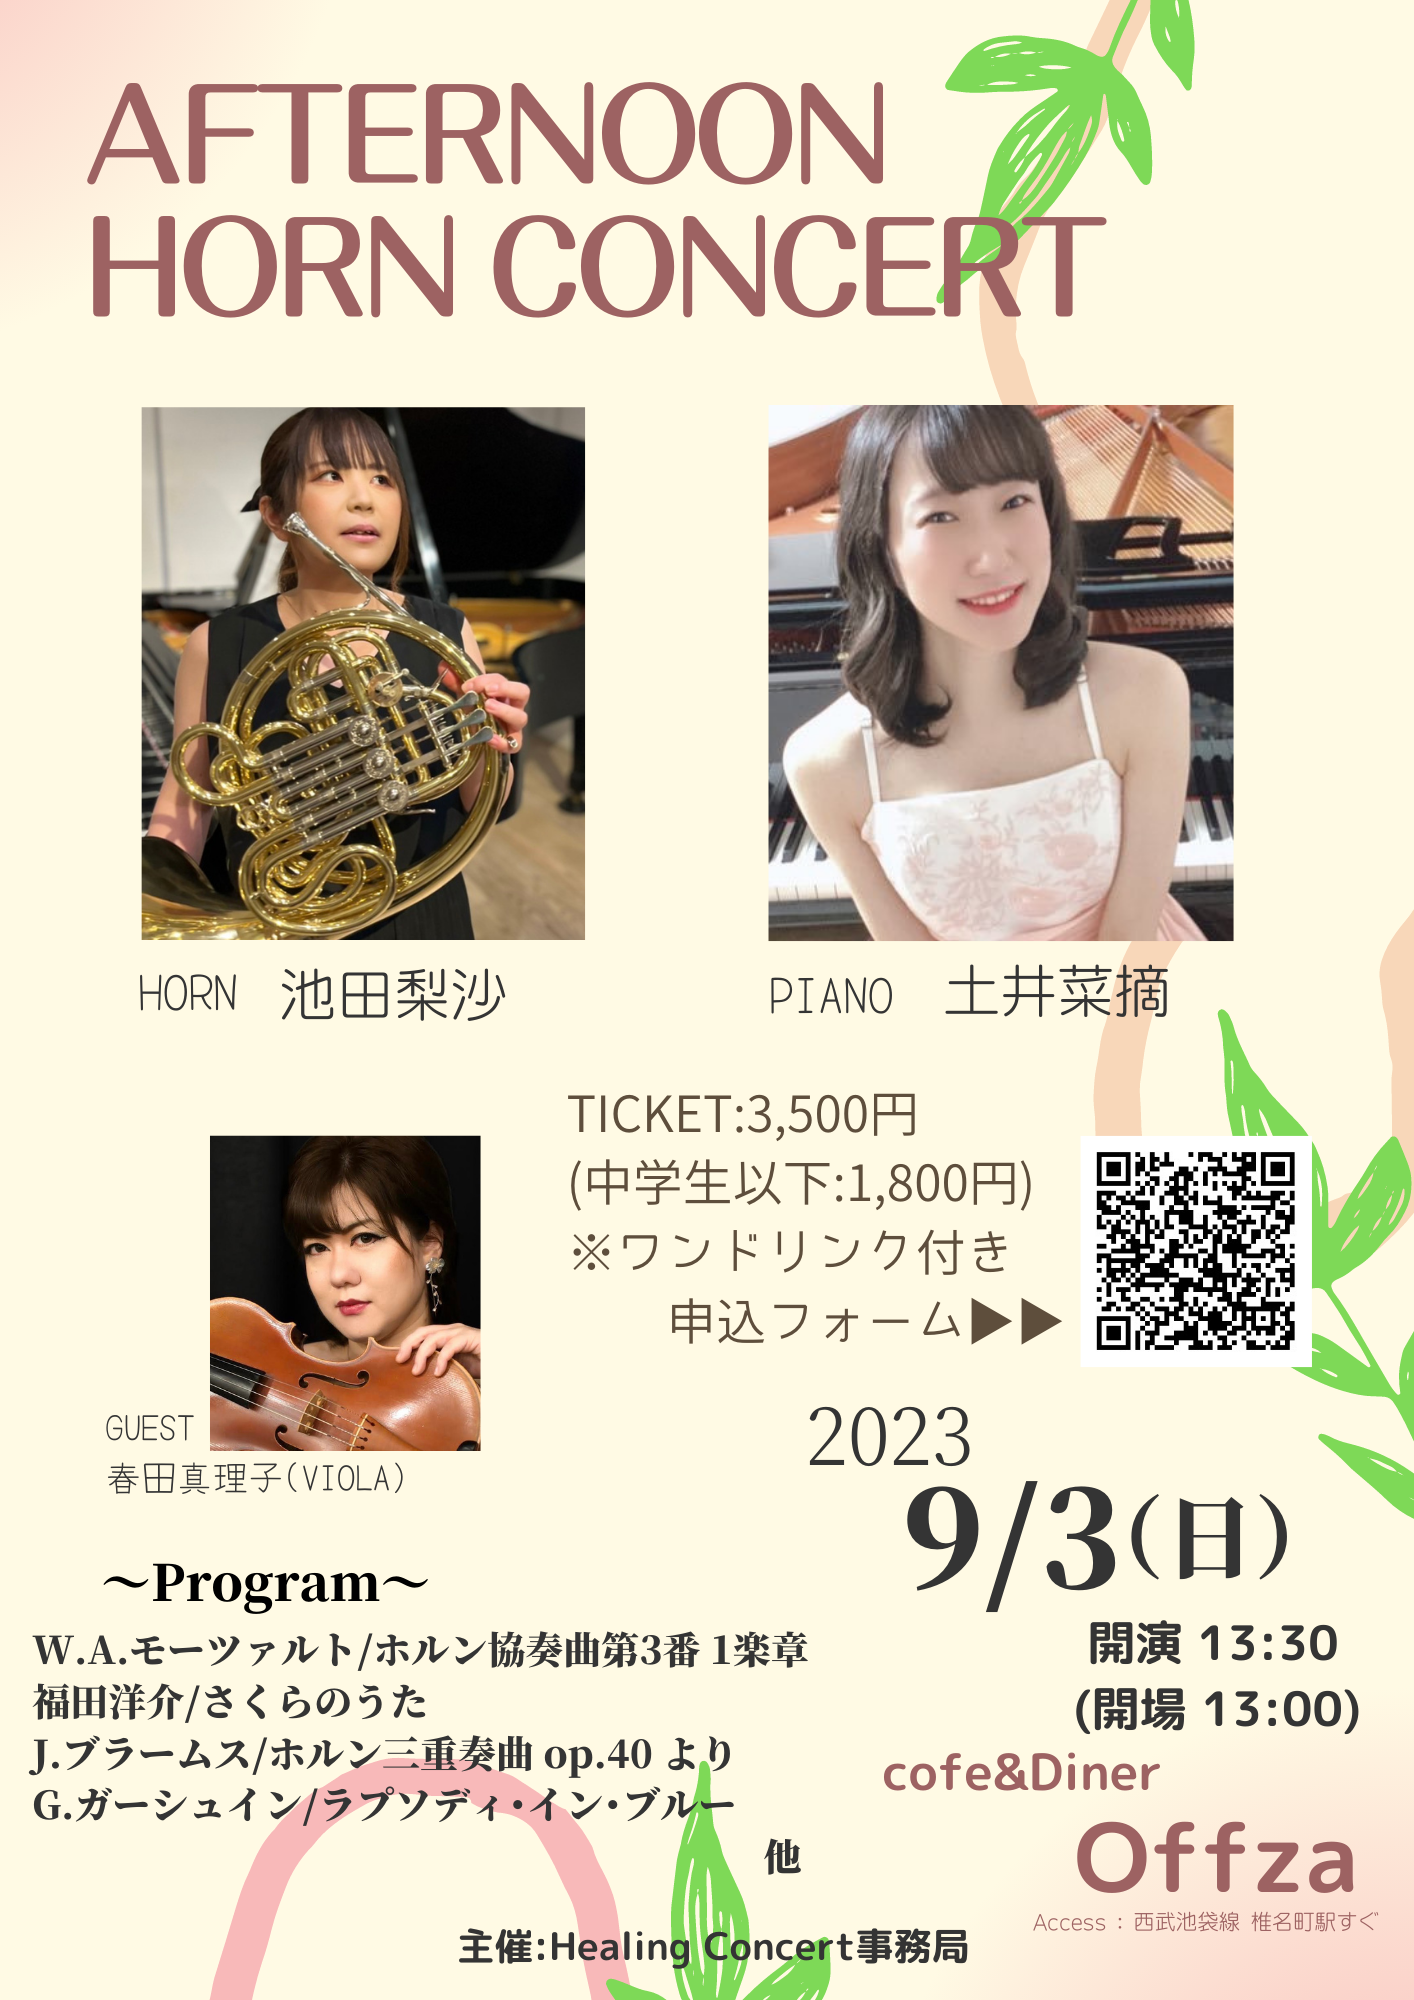 Afternoon Horn Concert